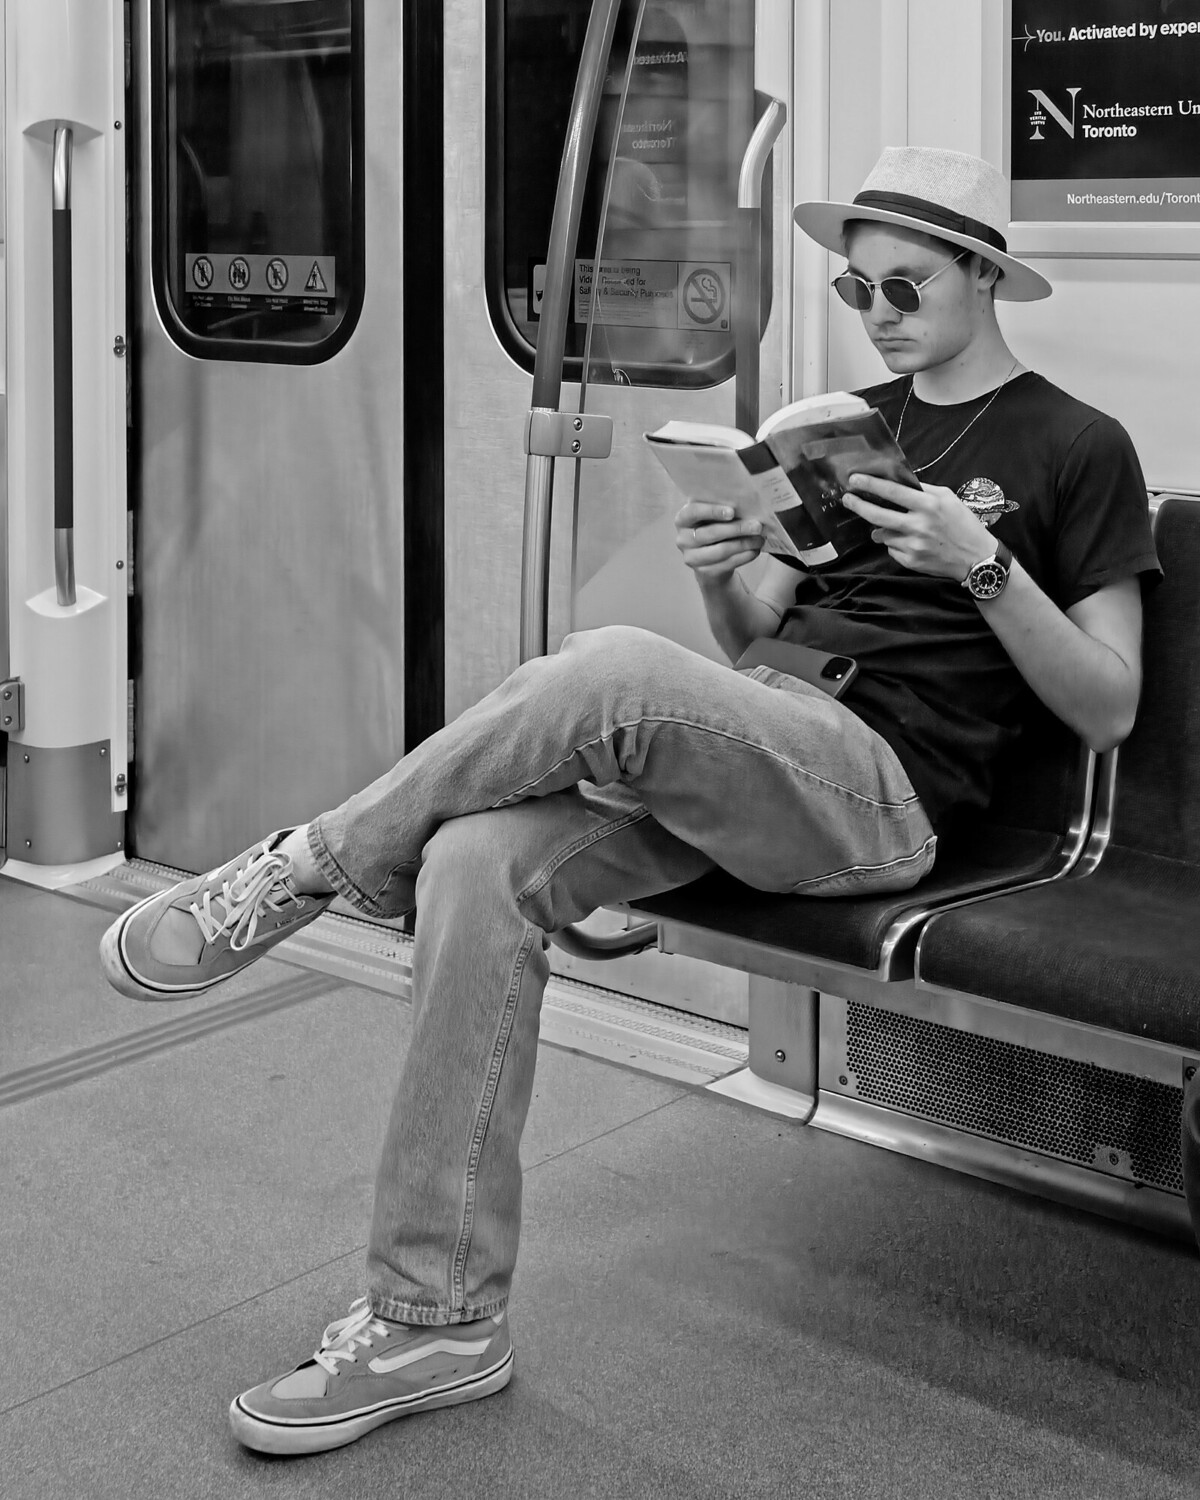 Subway Reader